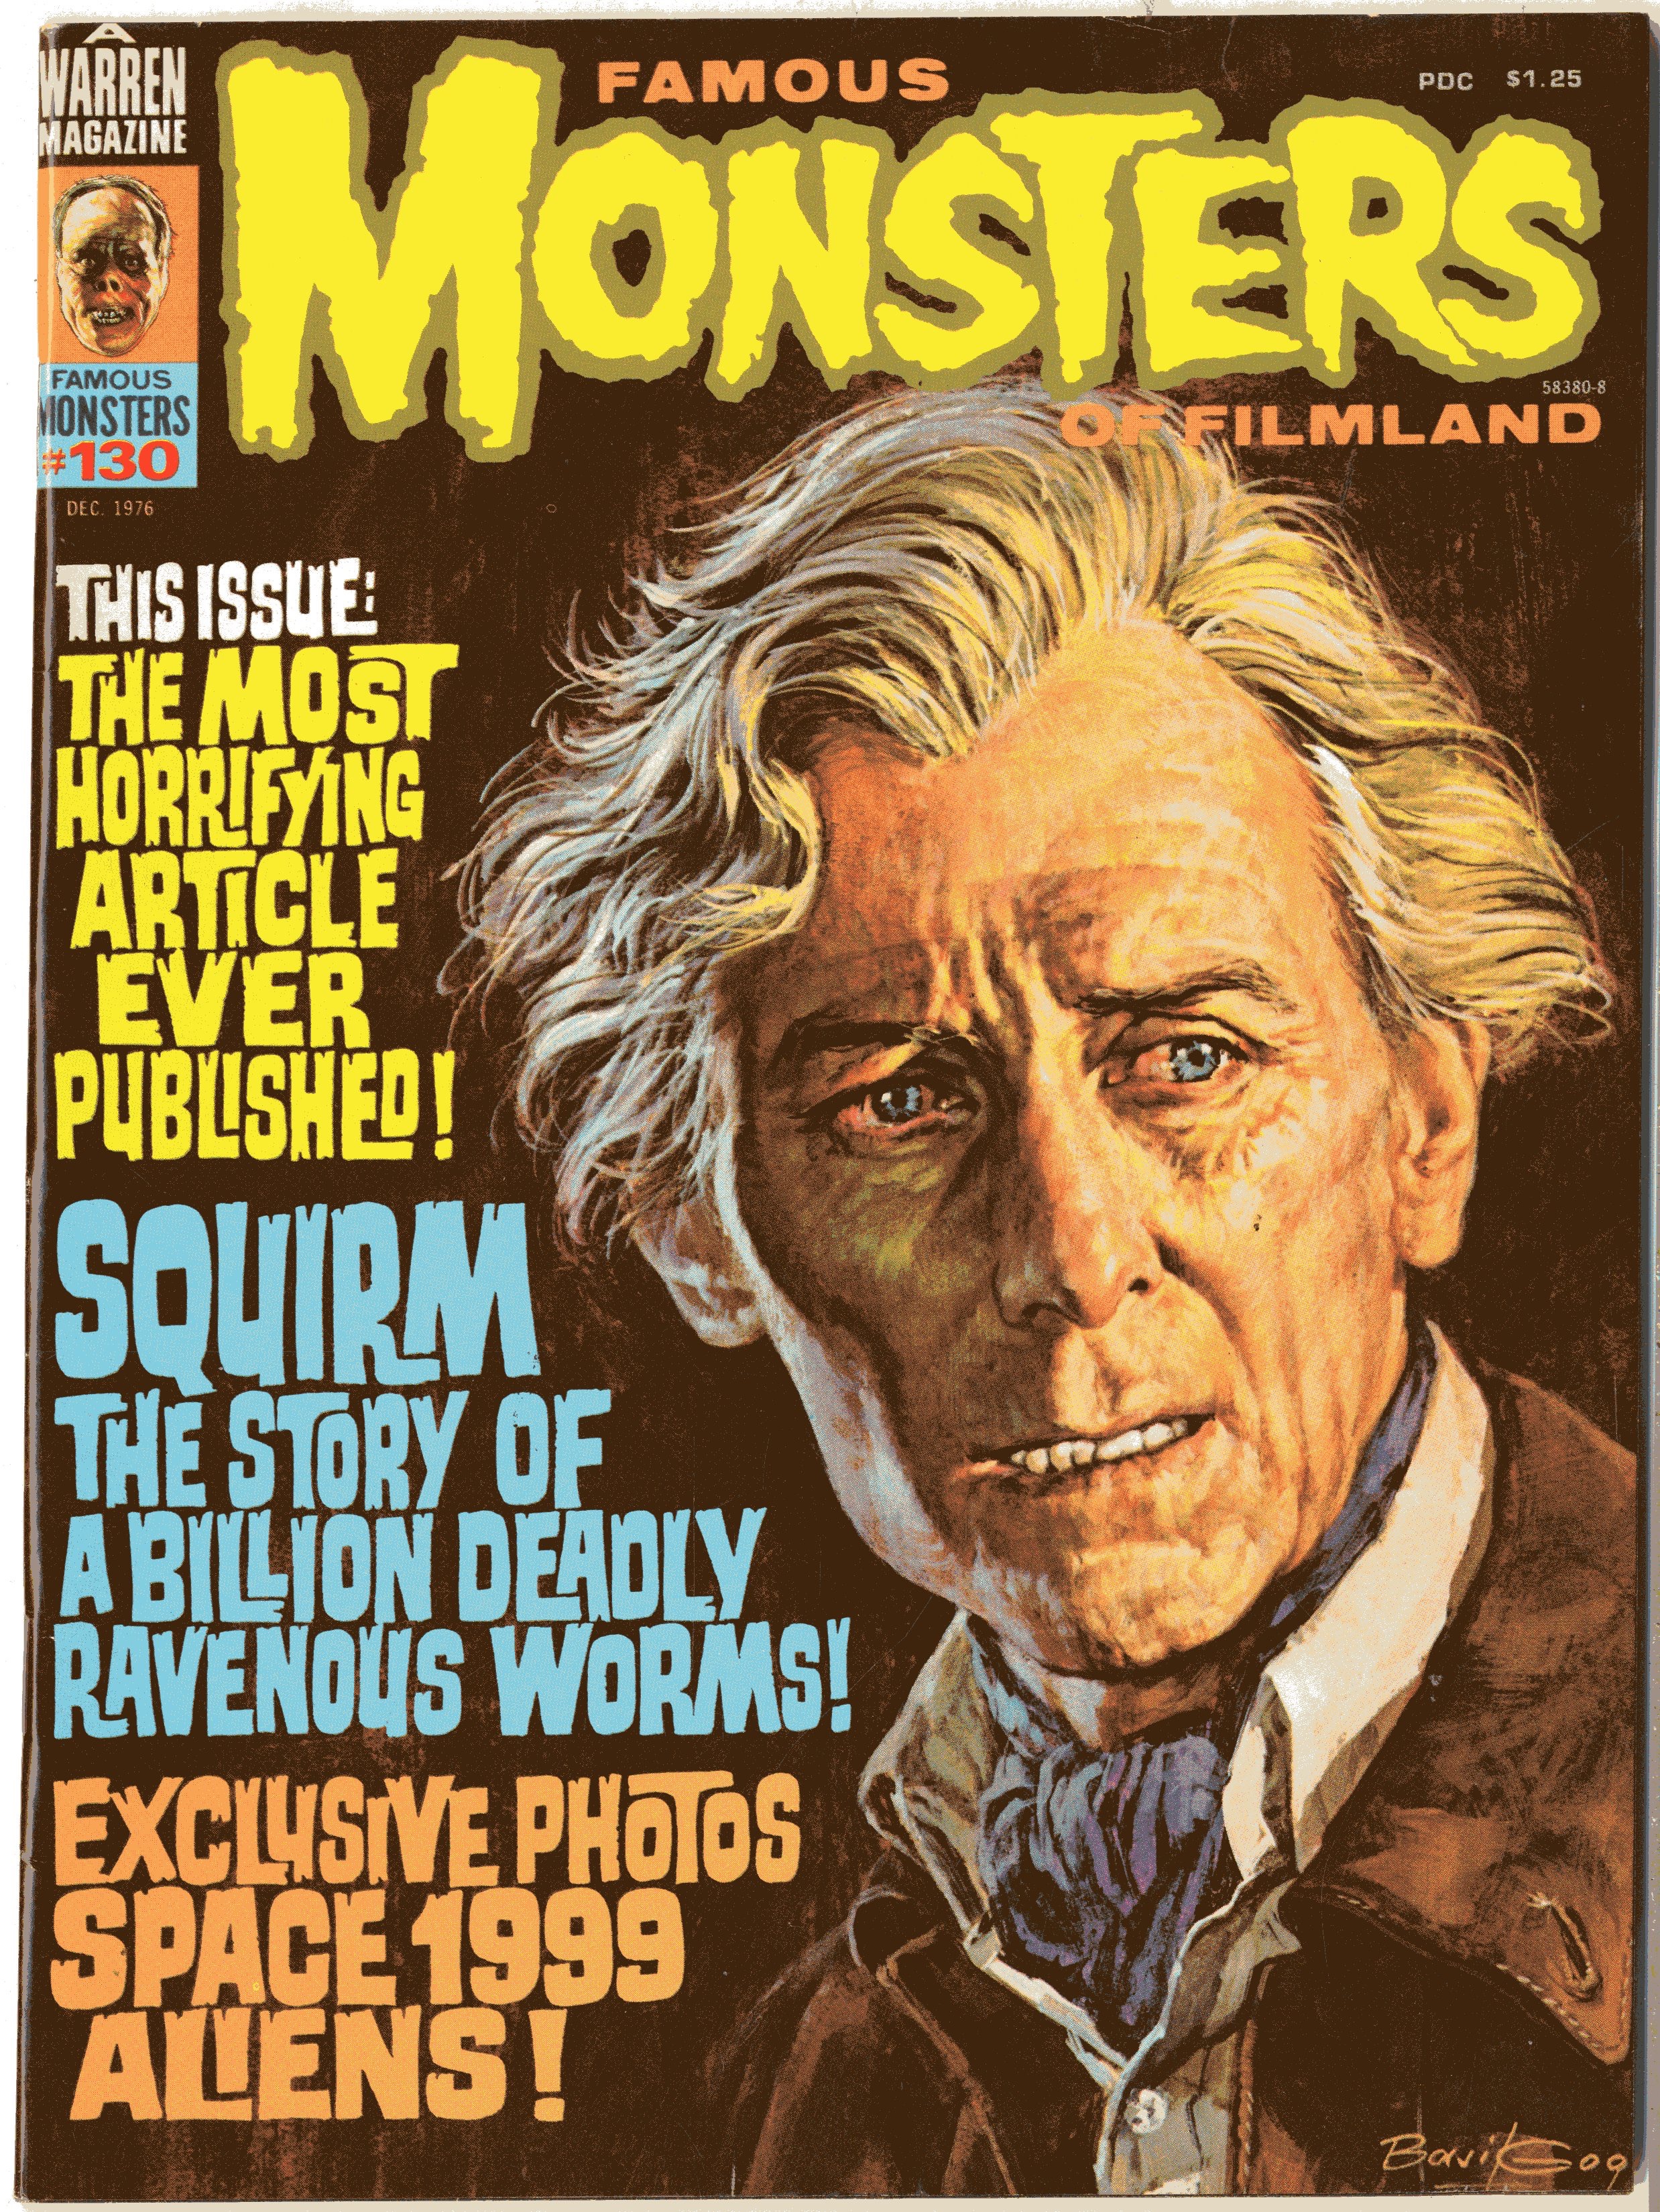 Kind magazine. Знаменитые монстры Фильмландии. Журнал Monsters. Famous Magazines.